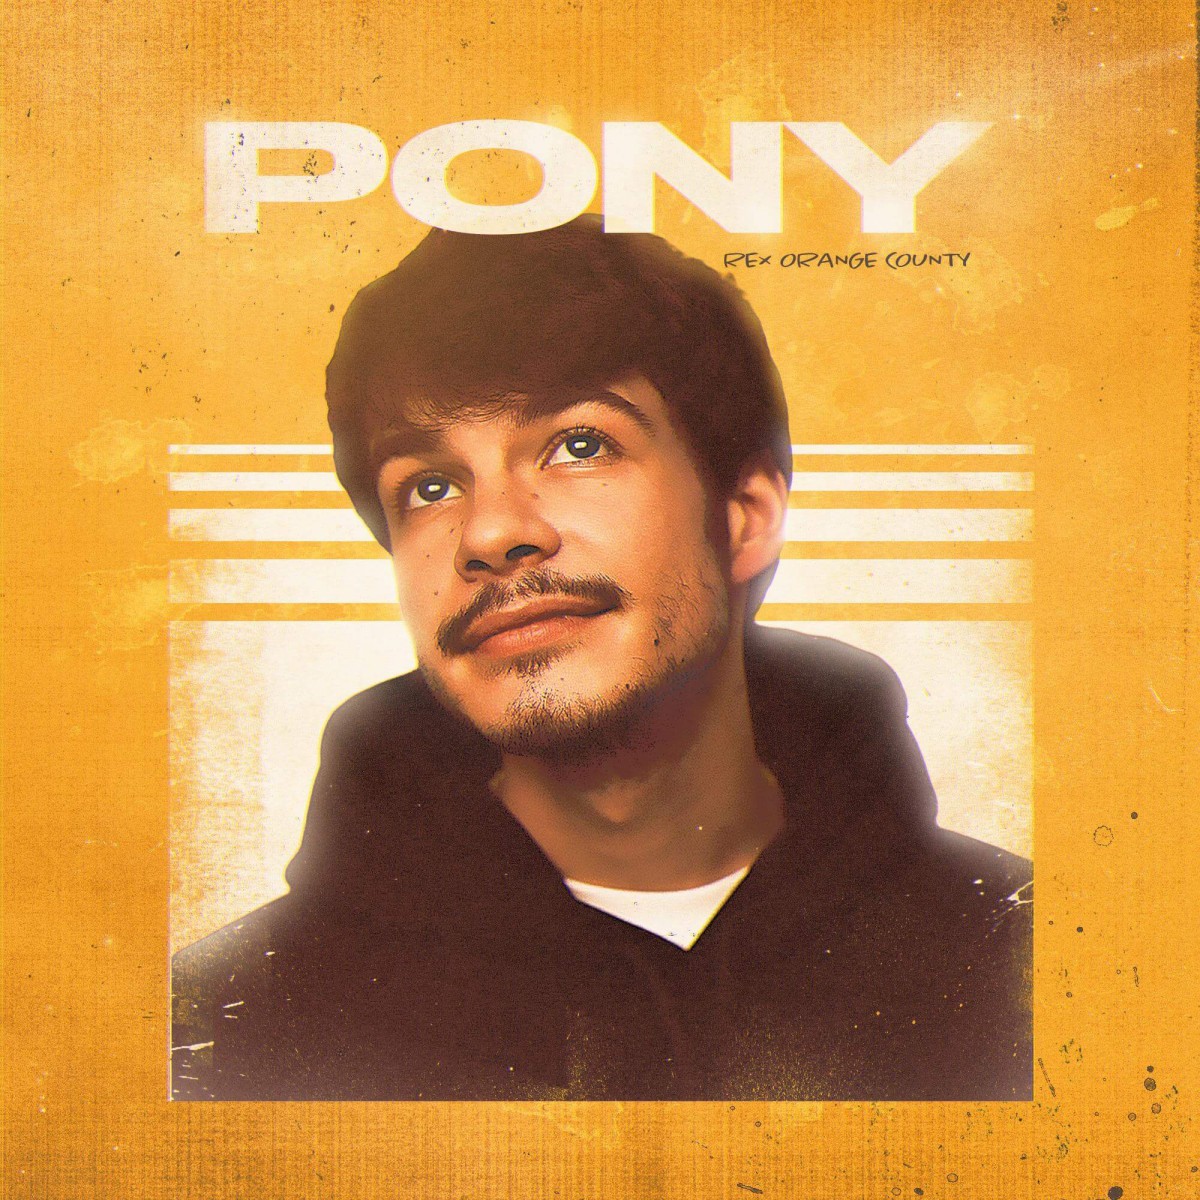 Cover album ‘Pony’ Rex Orange County yang didominasi warna oranye